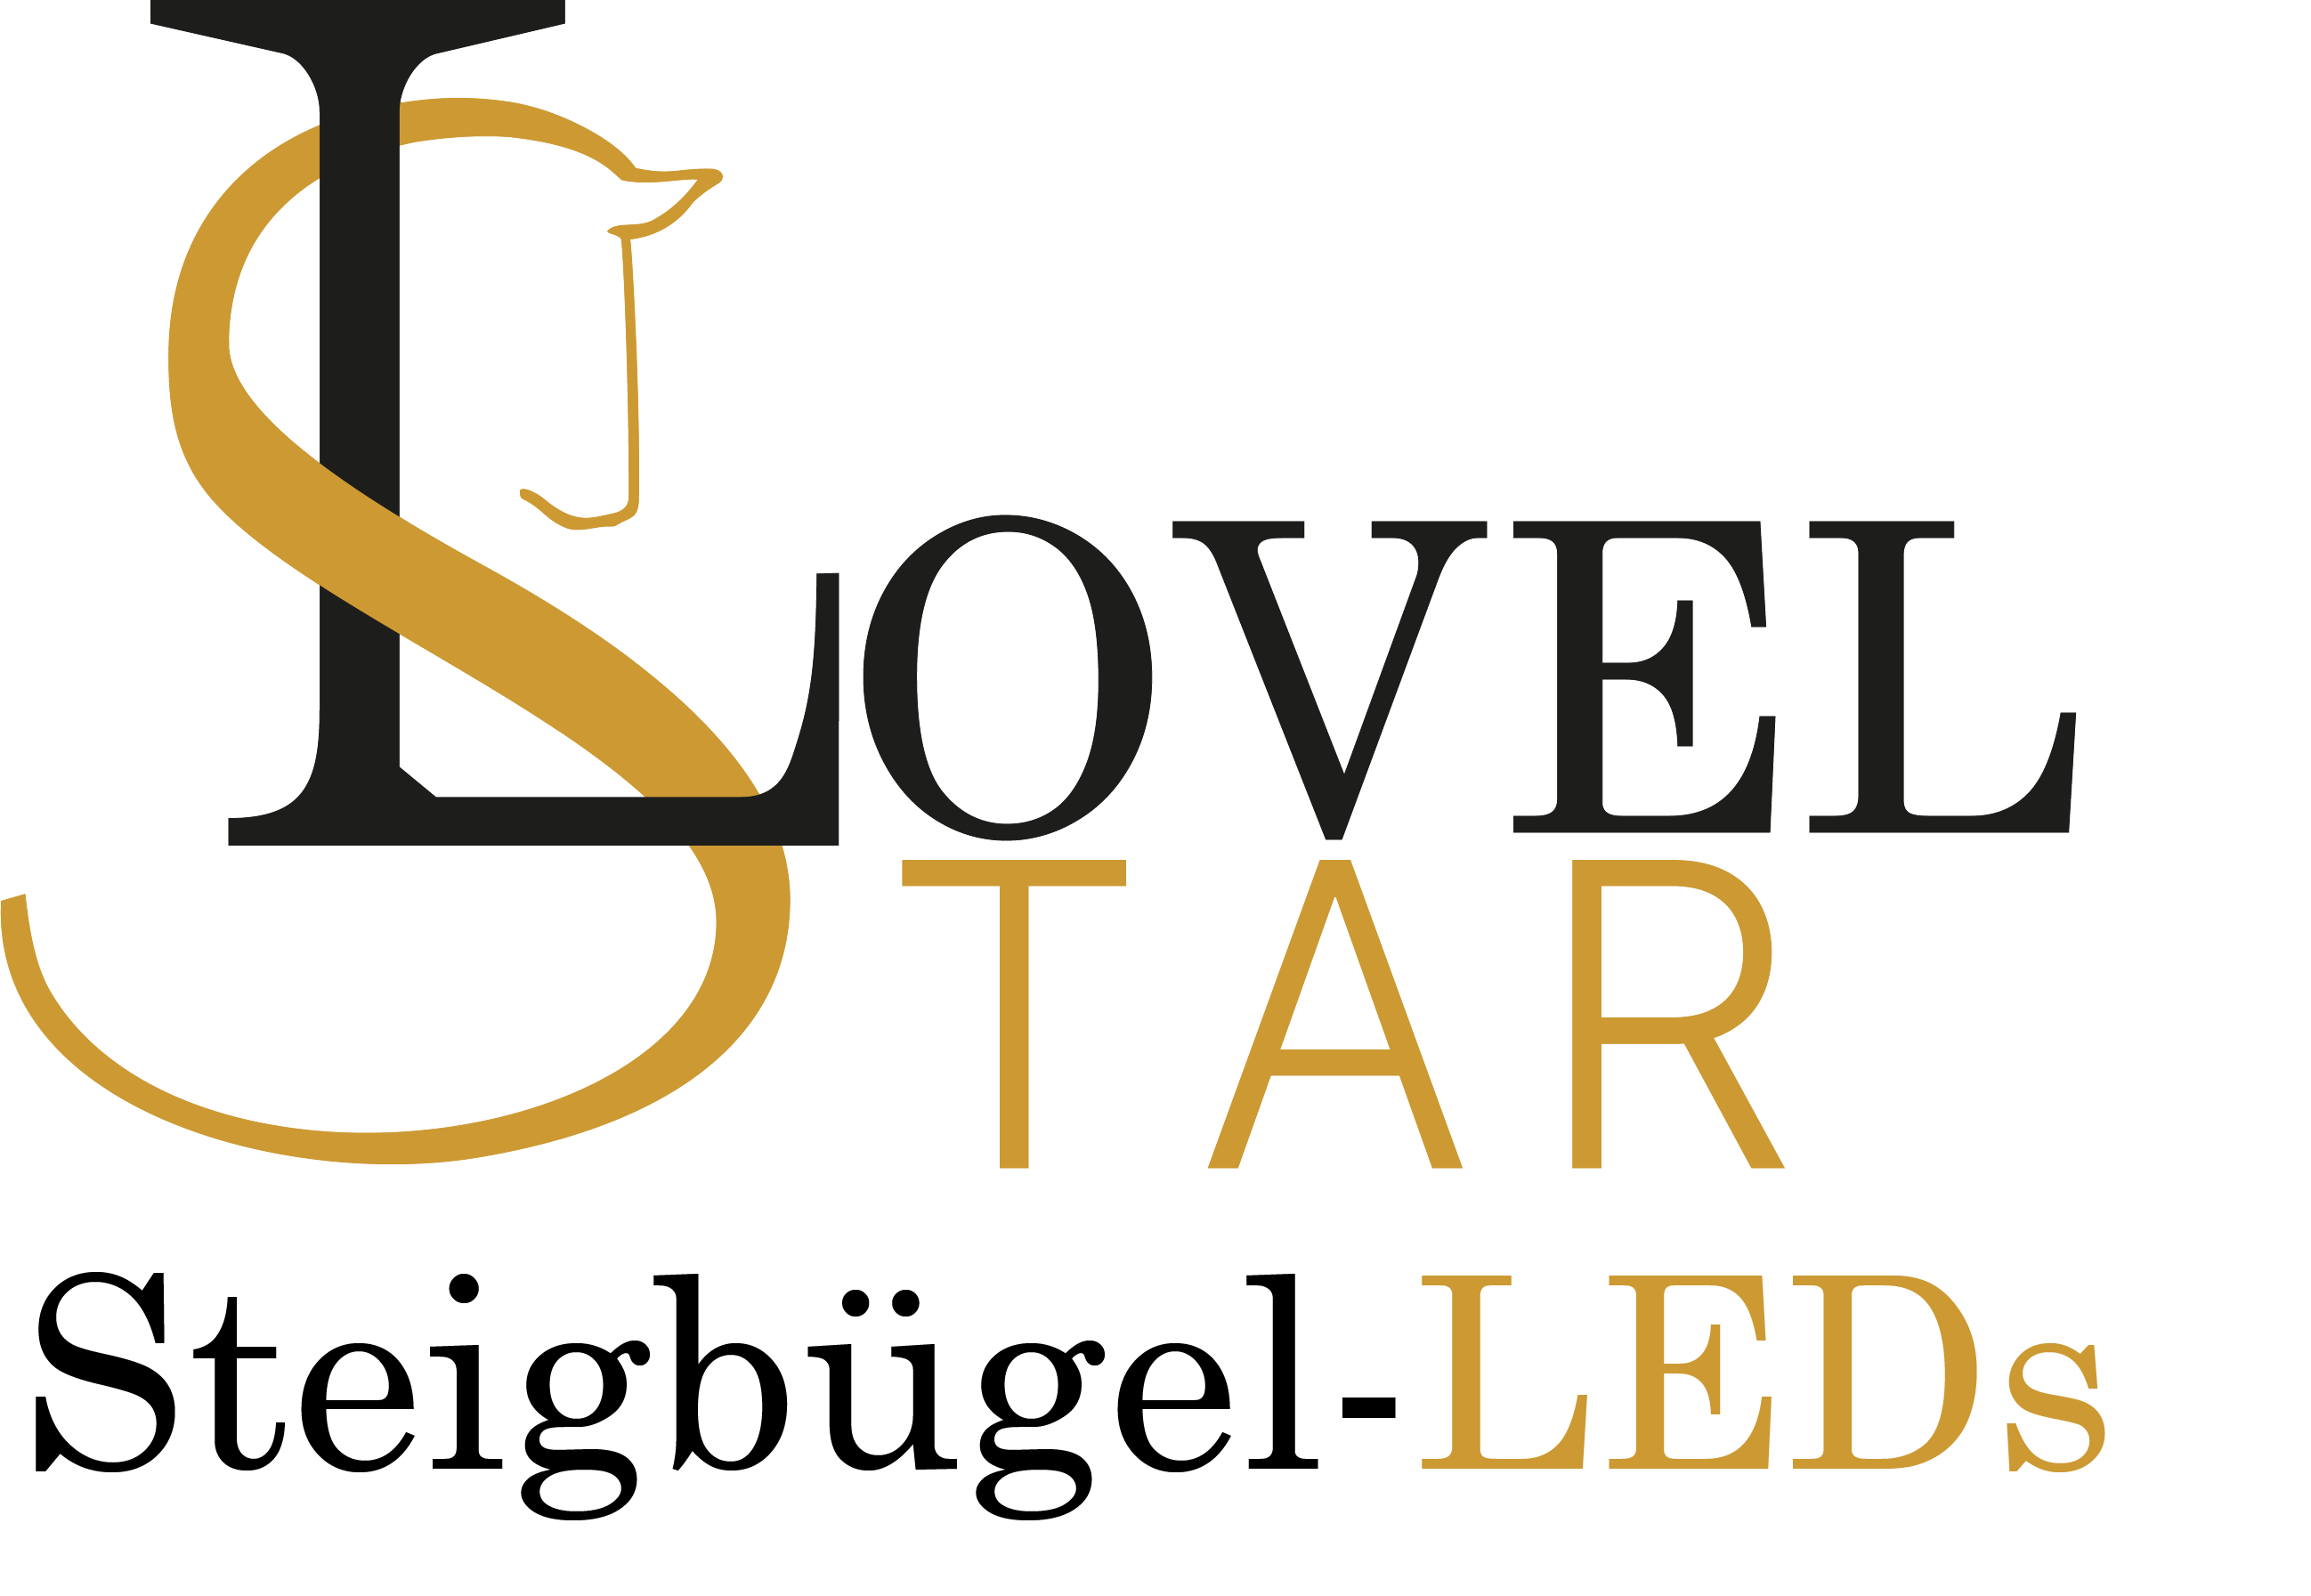 LovelStar Steigbügel Leds